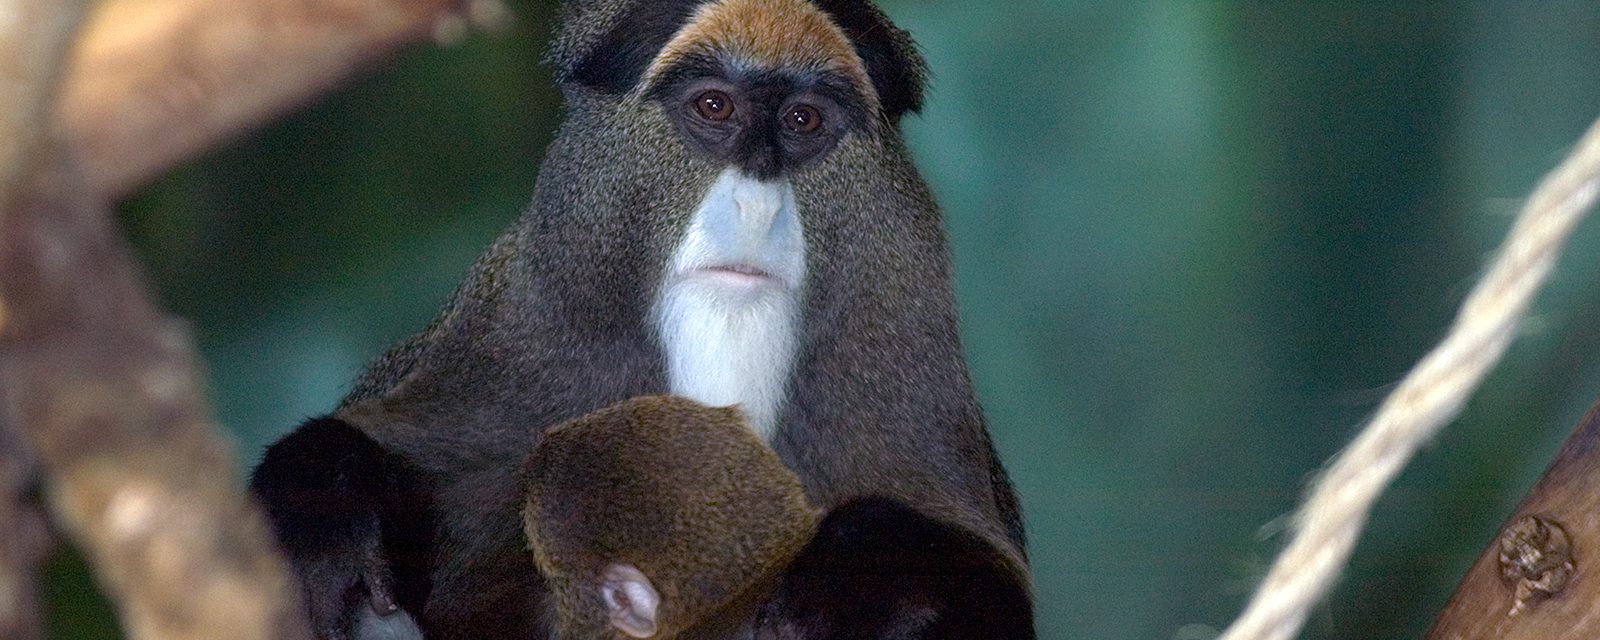 DeBrazza's monkey in exhibit